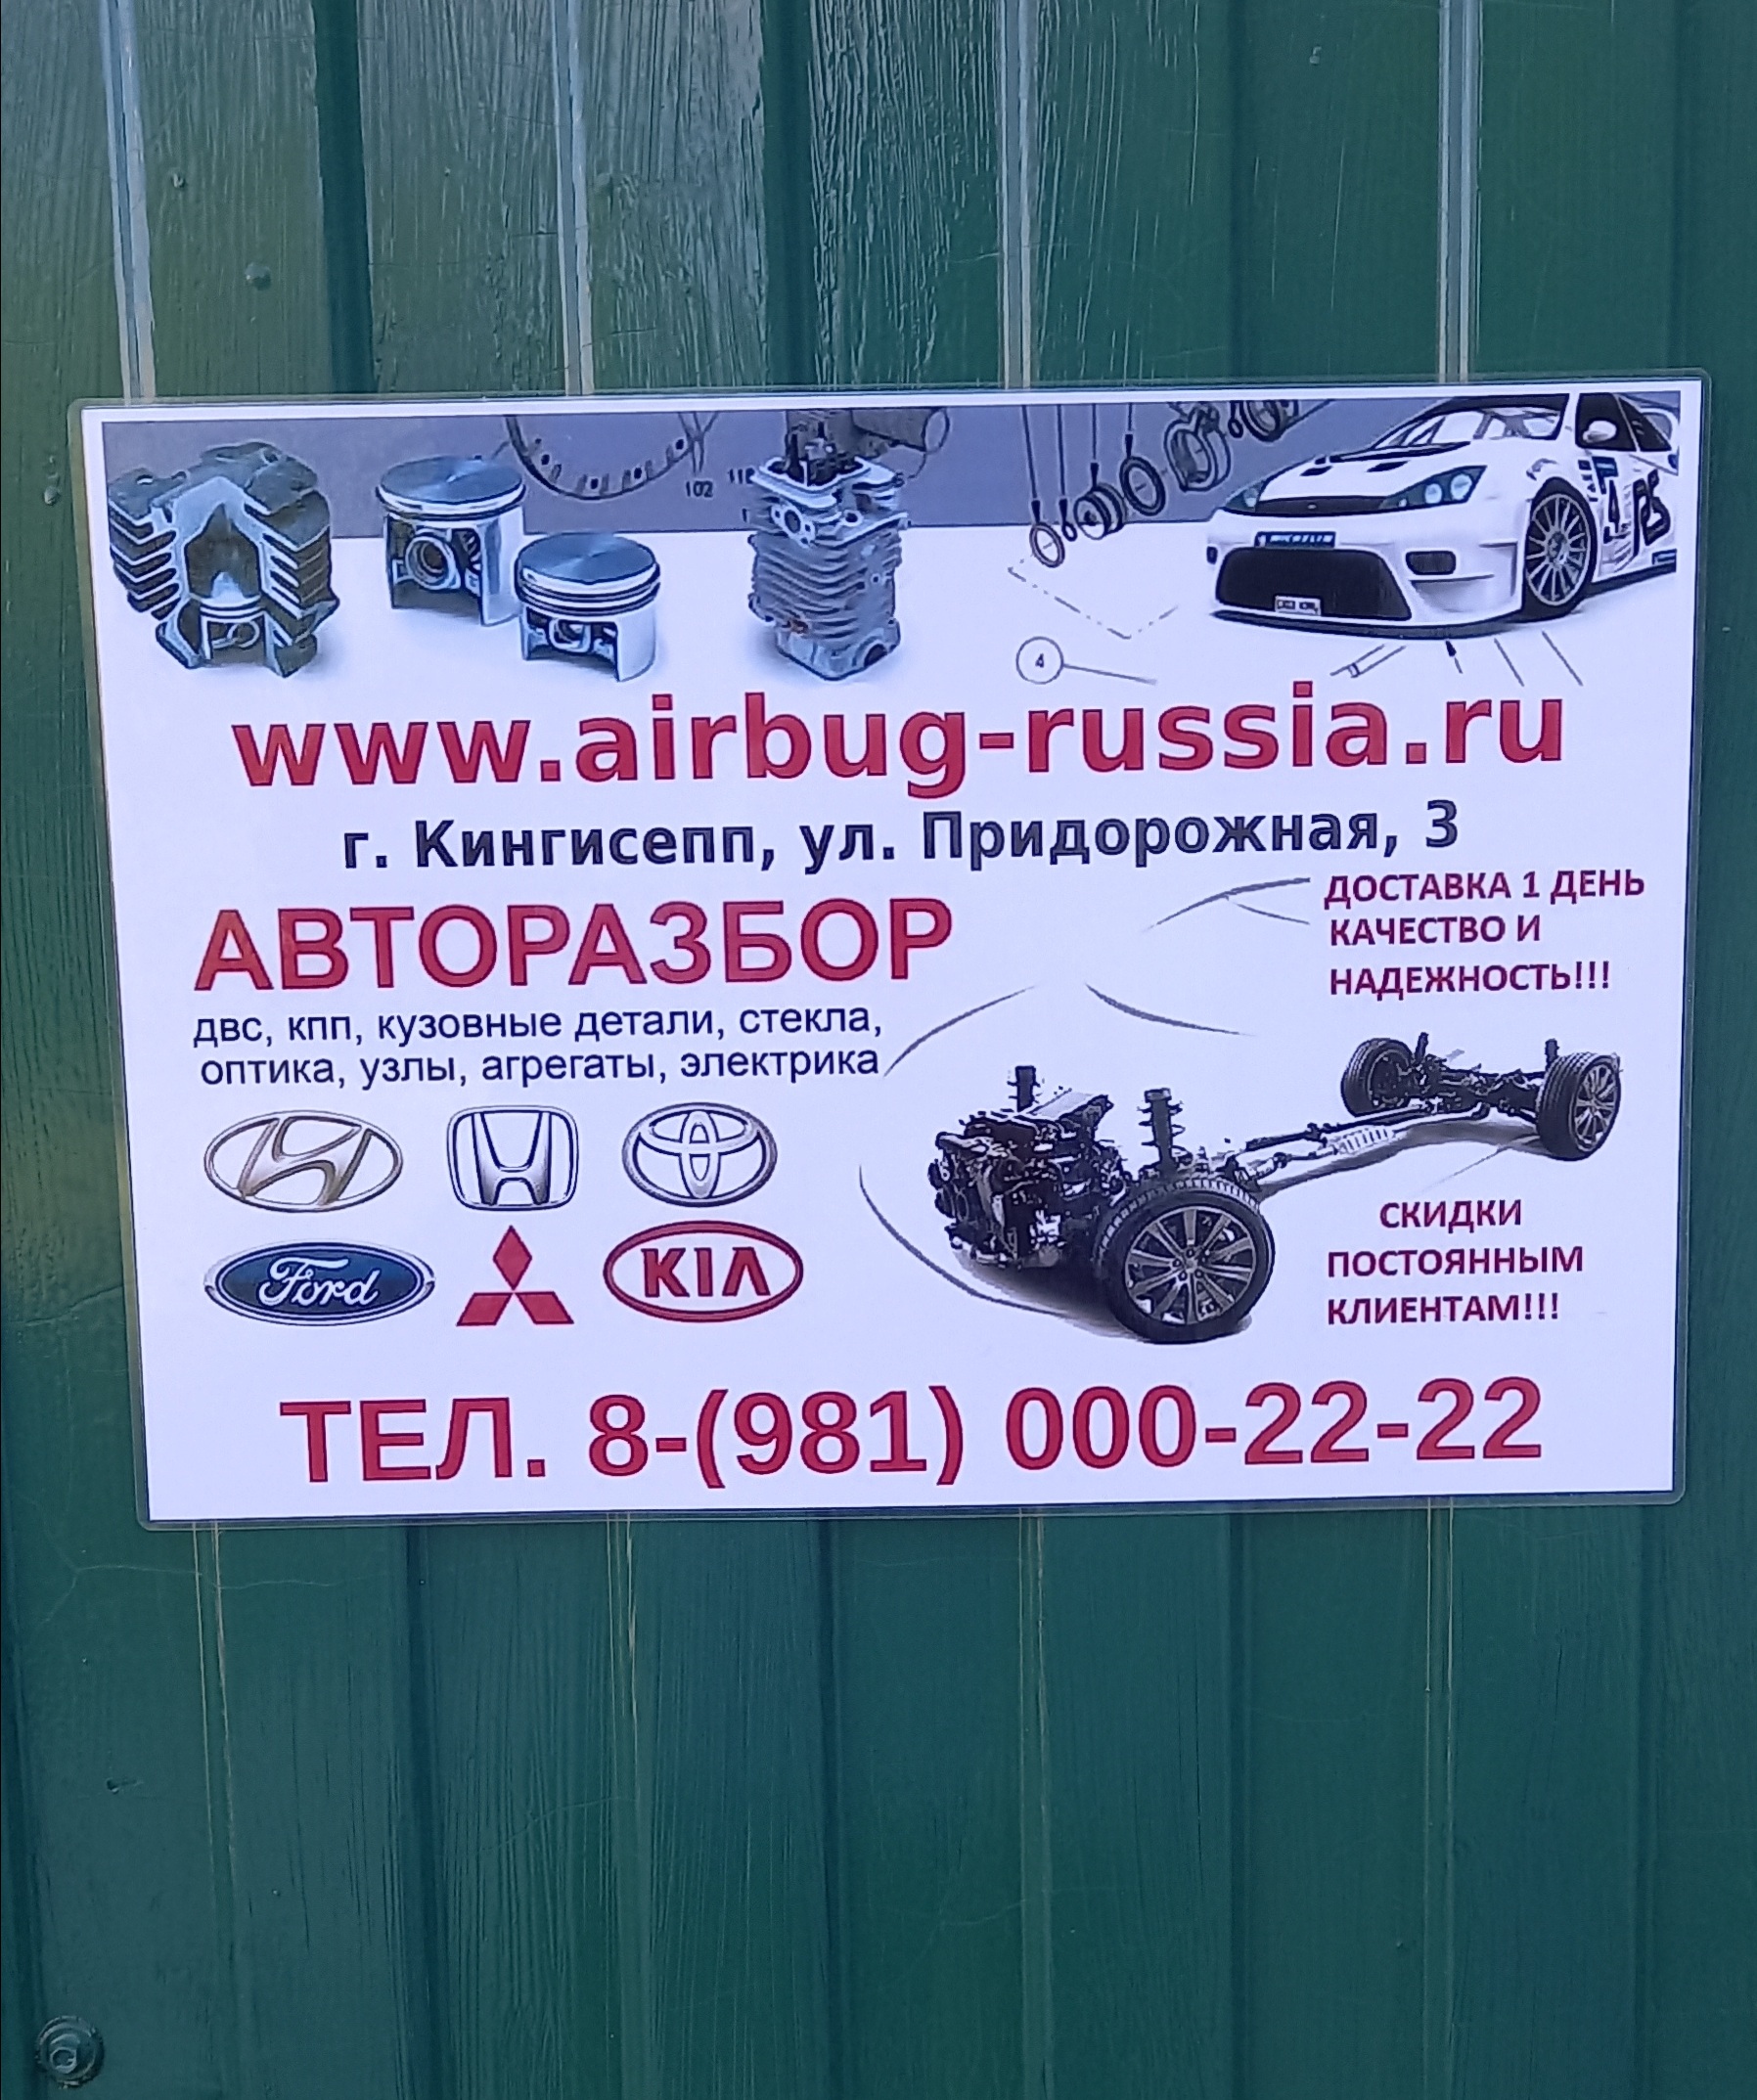 Авторазбор Airbug Russia - фотография